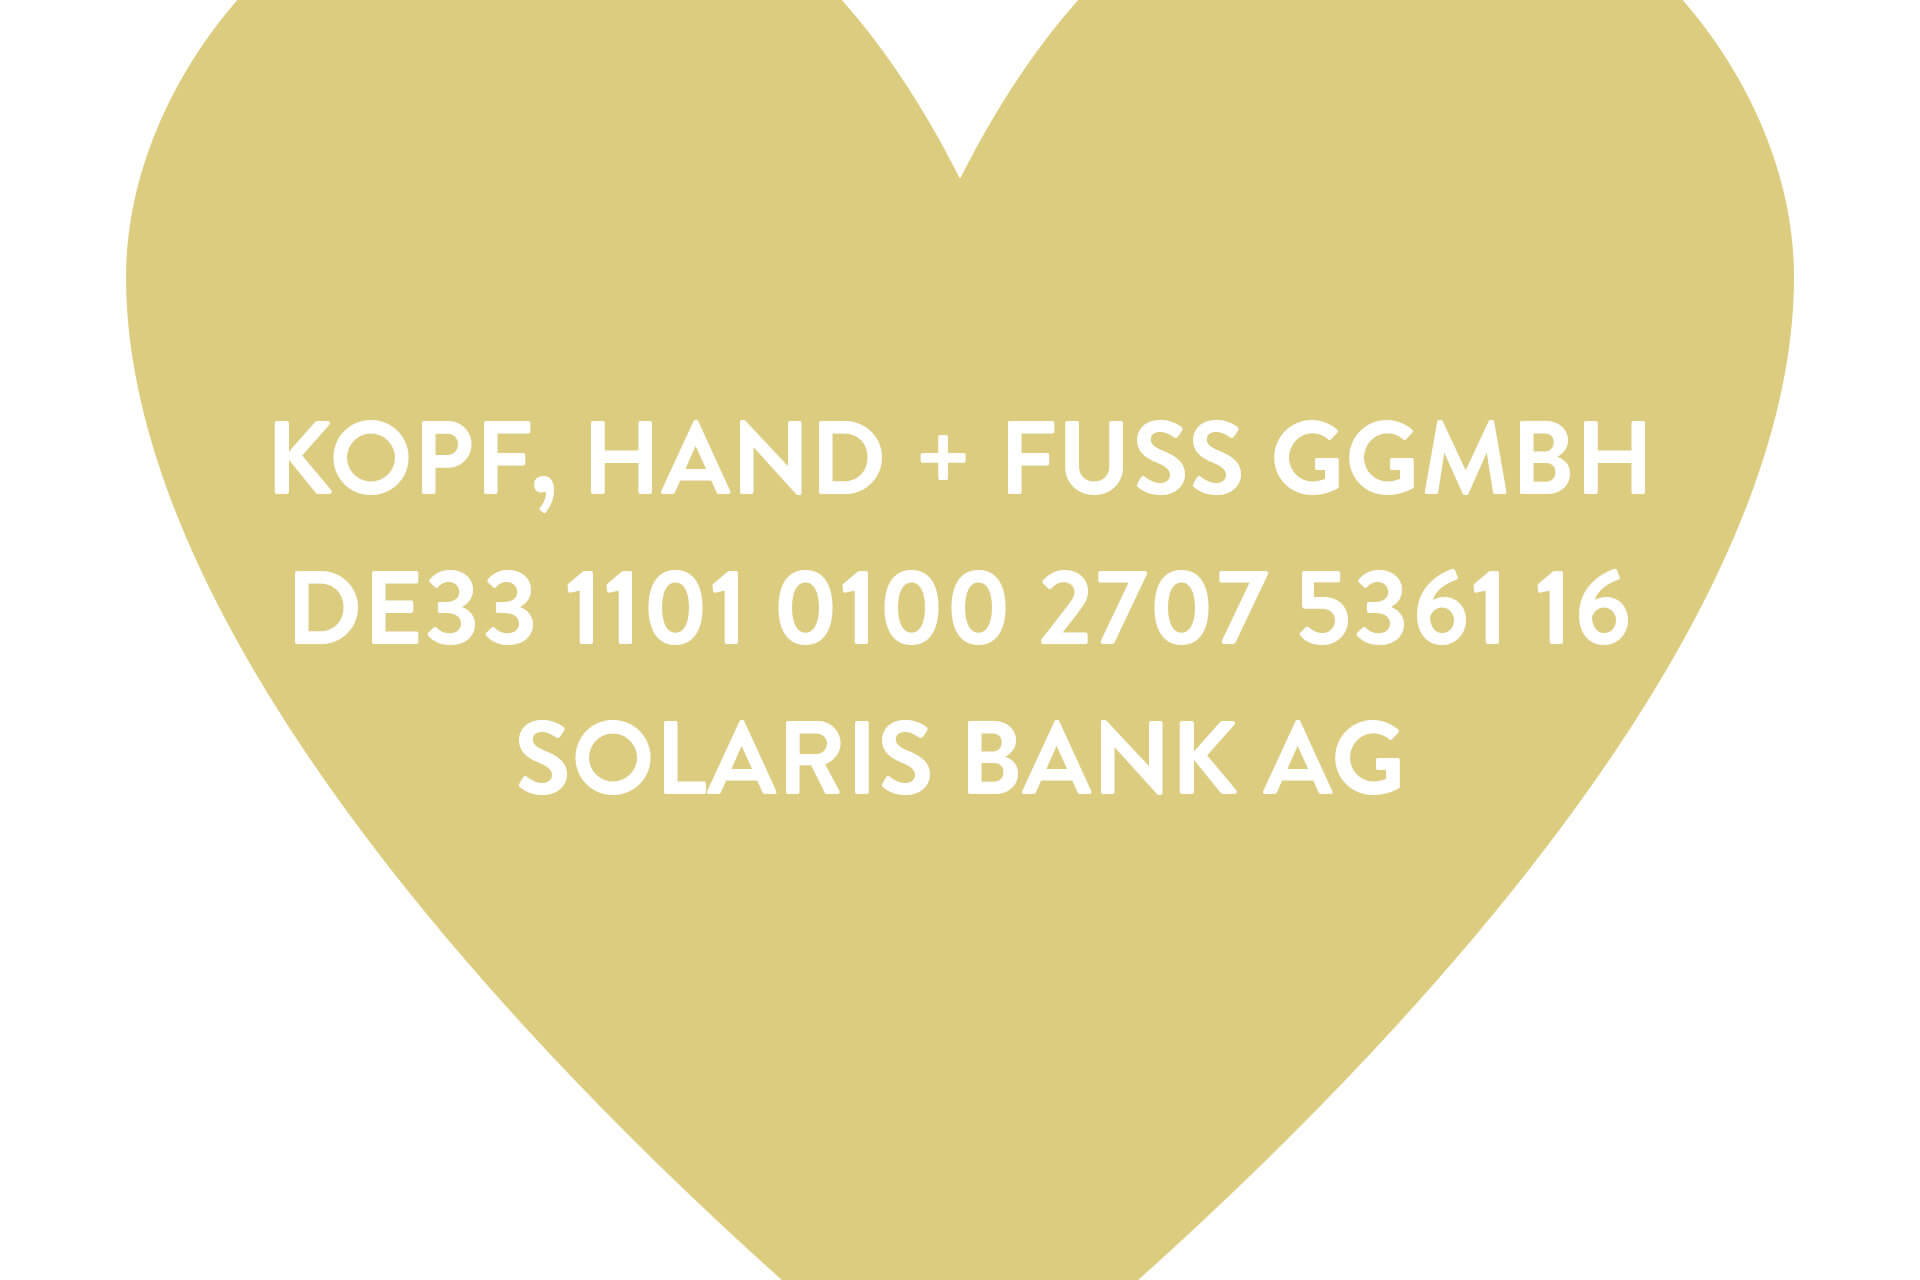 gelbes Herz, darin Text: Kopf, Hand und Fuss gGmbH, DE331101 0100 2707 5361 16 Solaris Bank AG